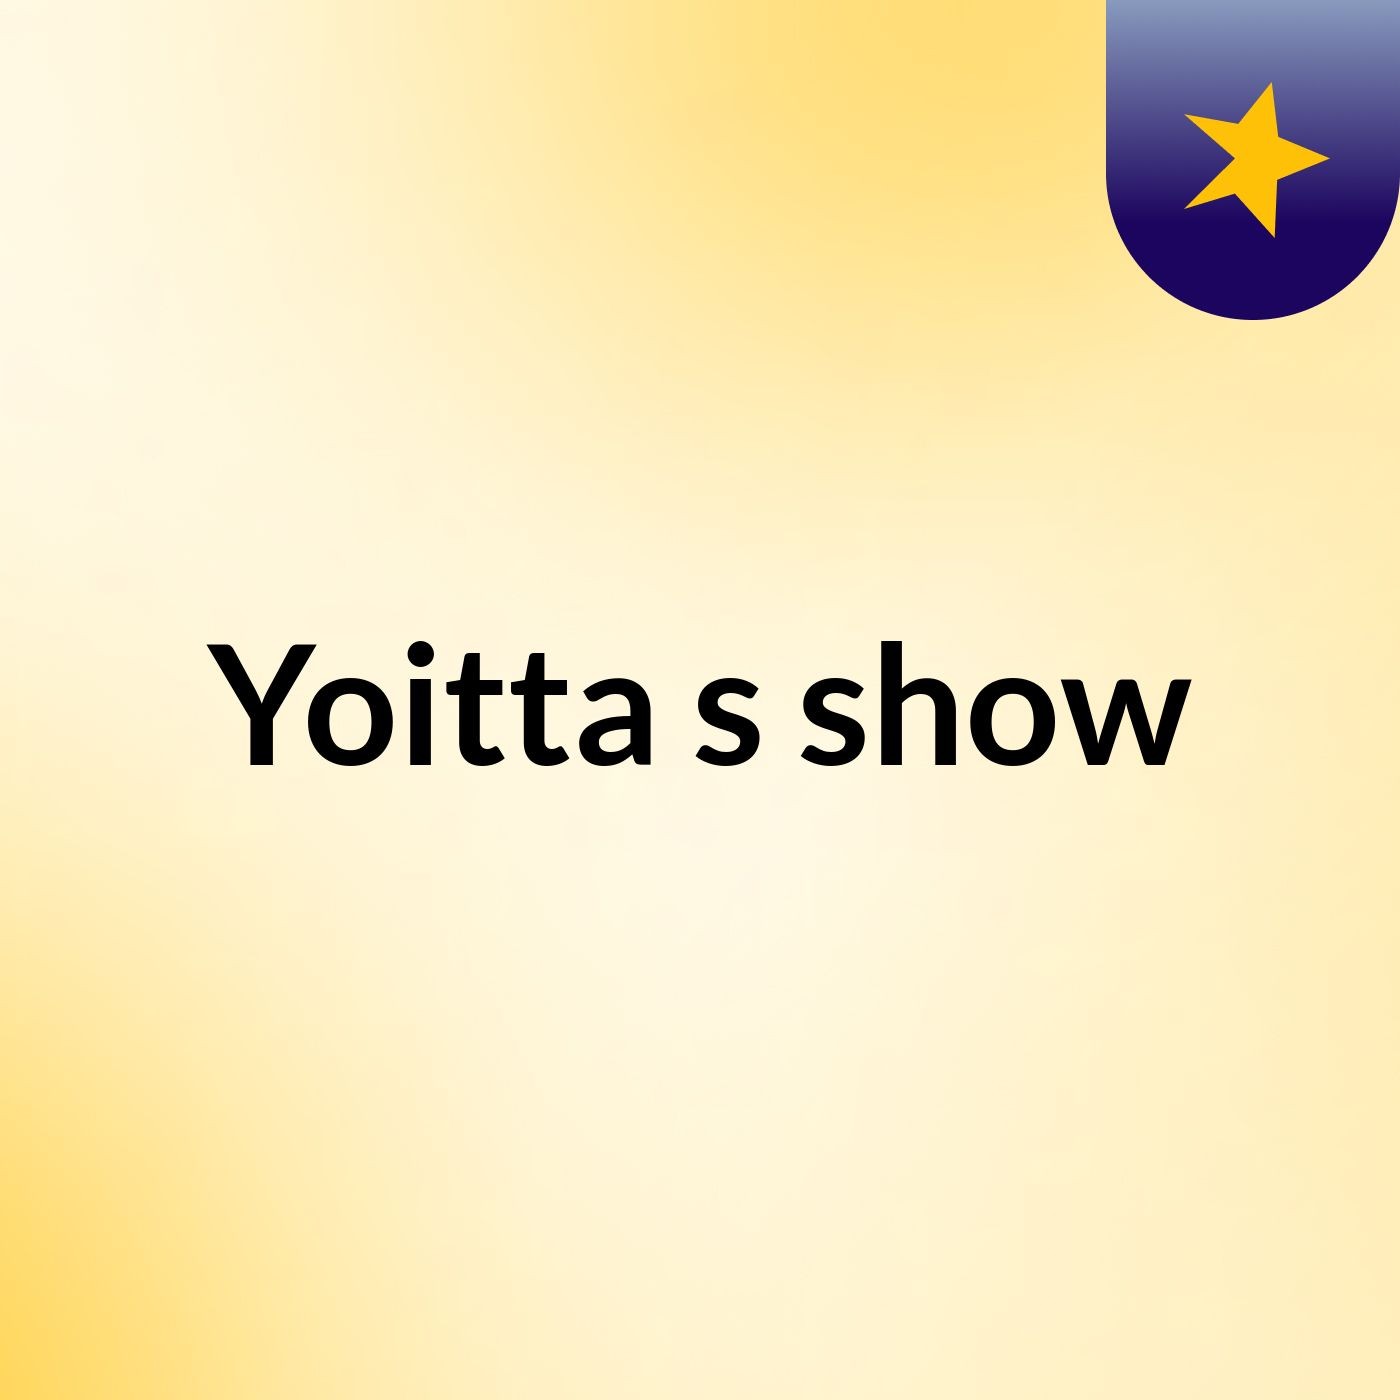 Yoitta's show